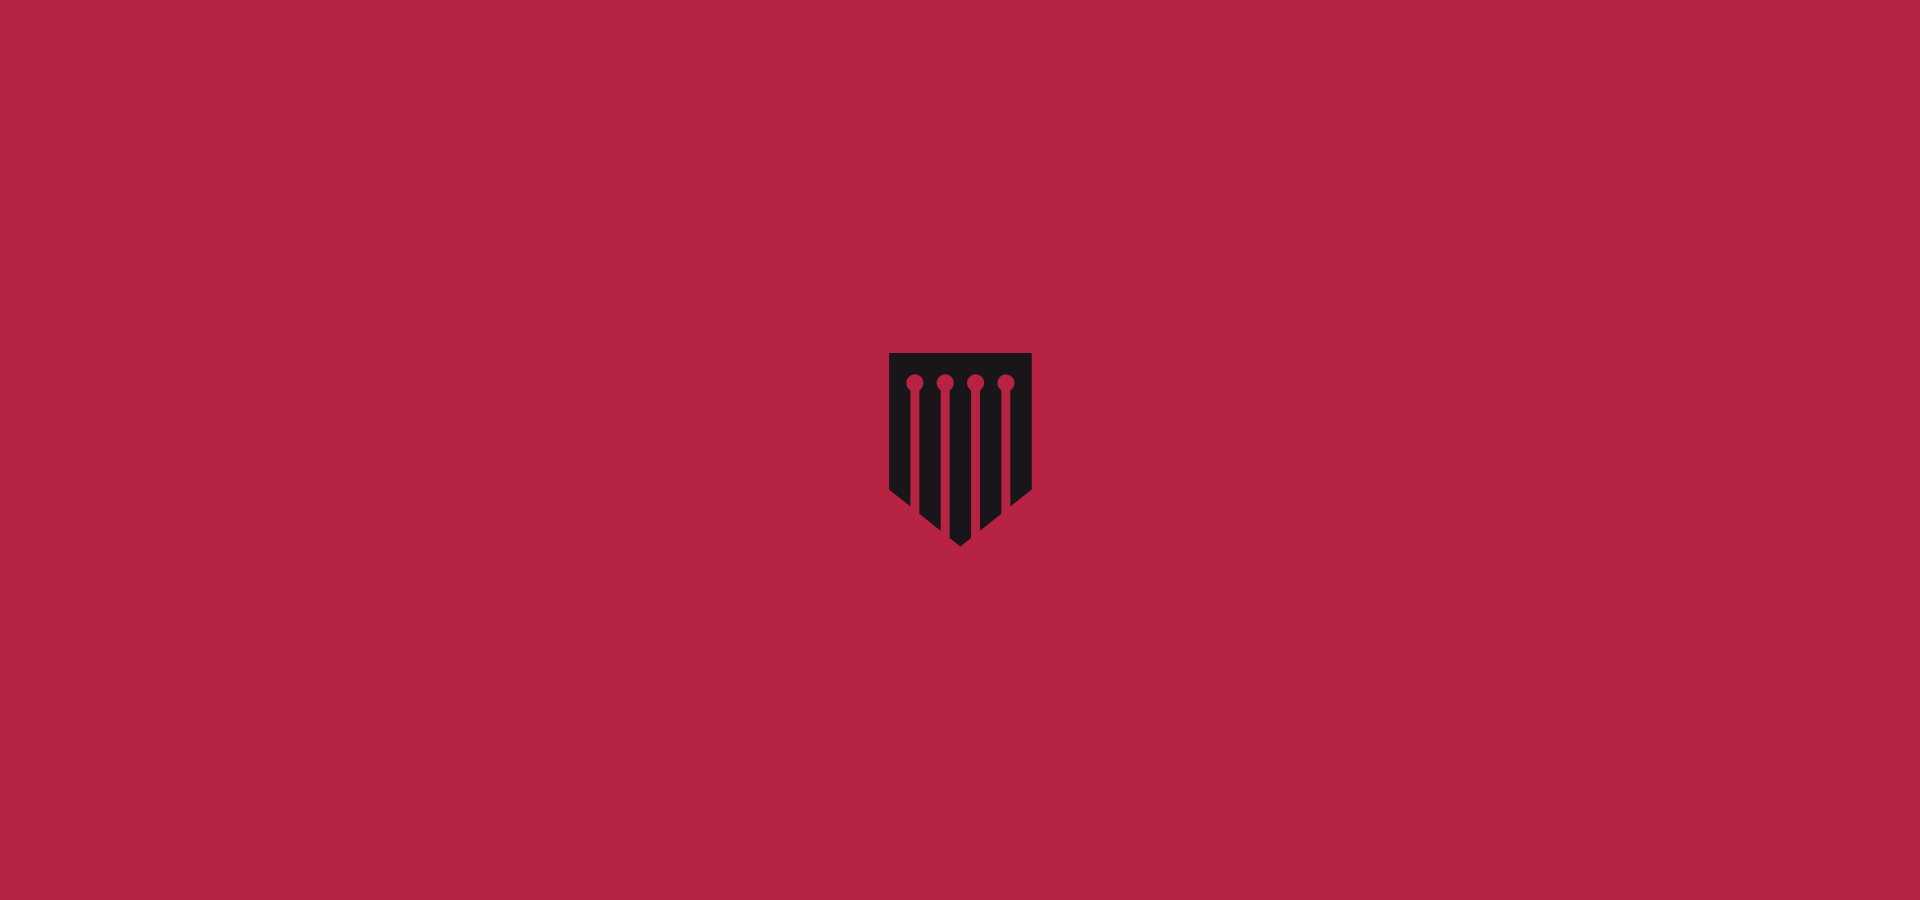 Dominik-Pacholczyk-Logo-Design-Collection-02